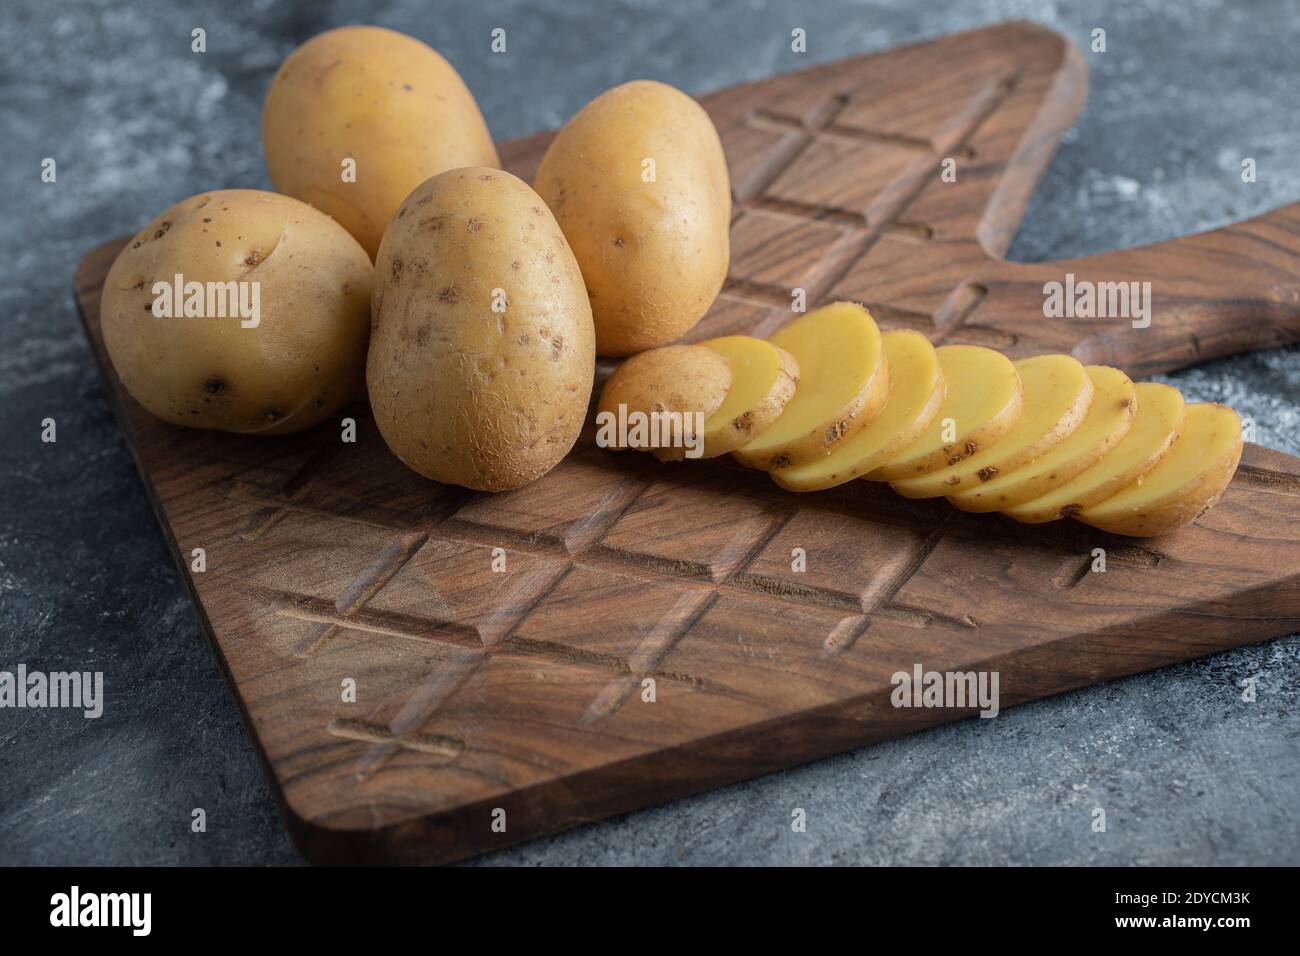 Close up photo of organic potatoes on wooden cutting board Stock Photo